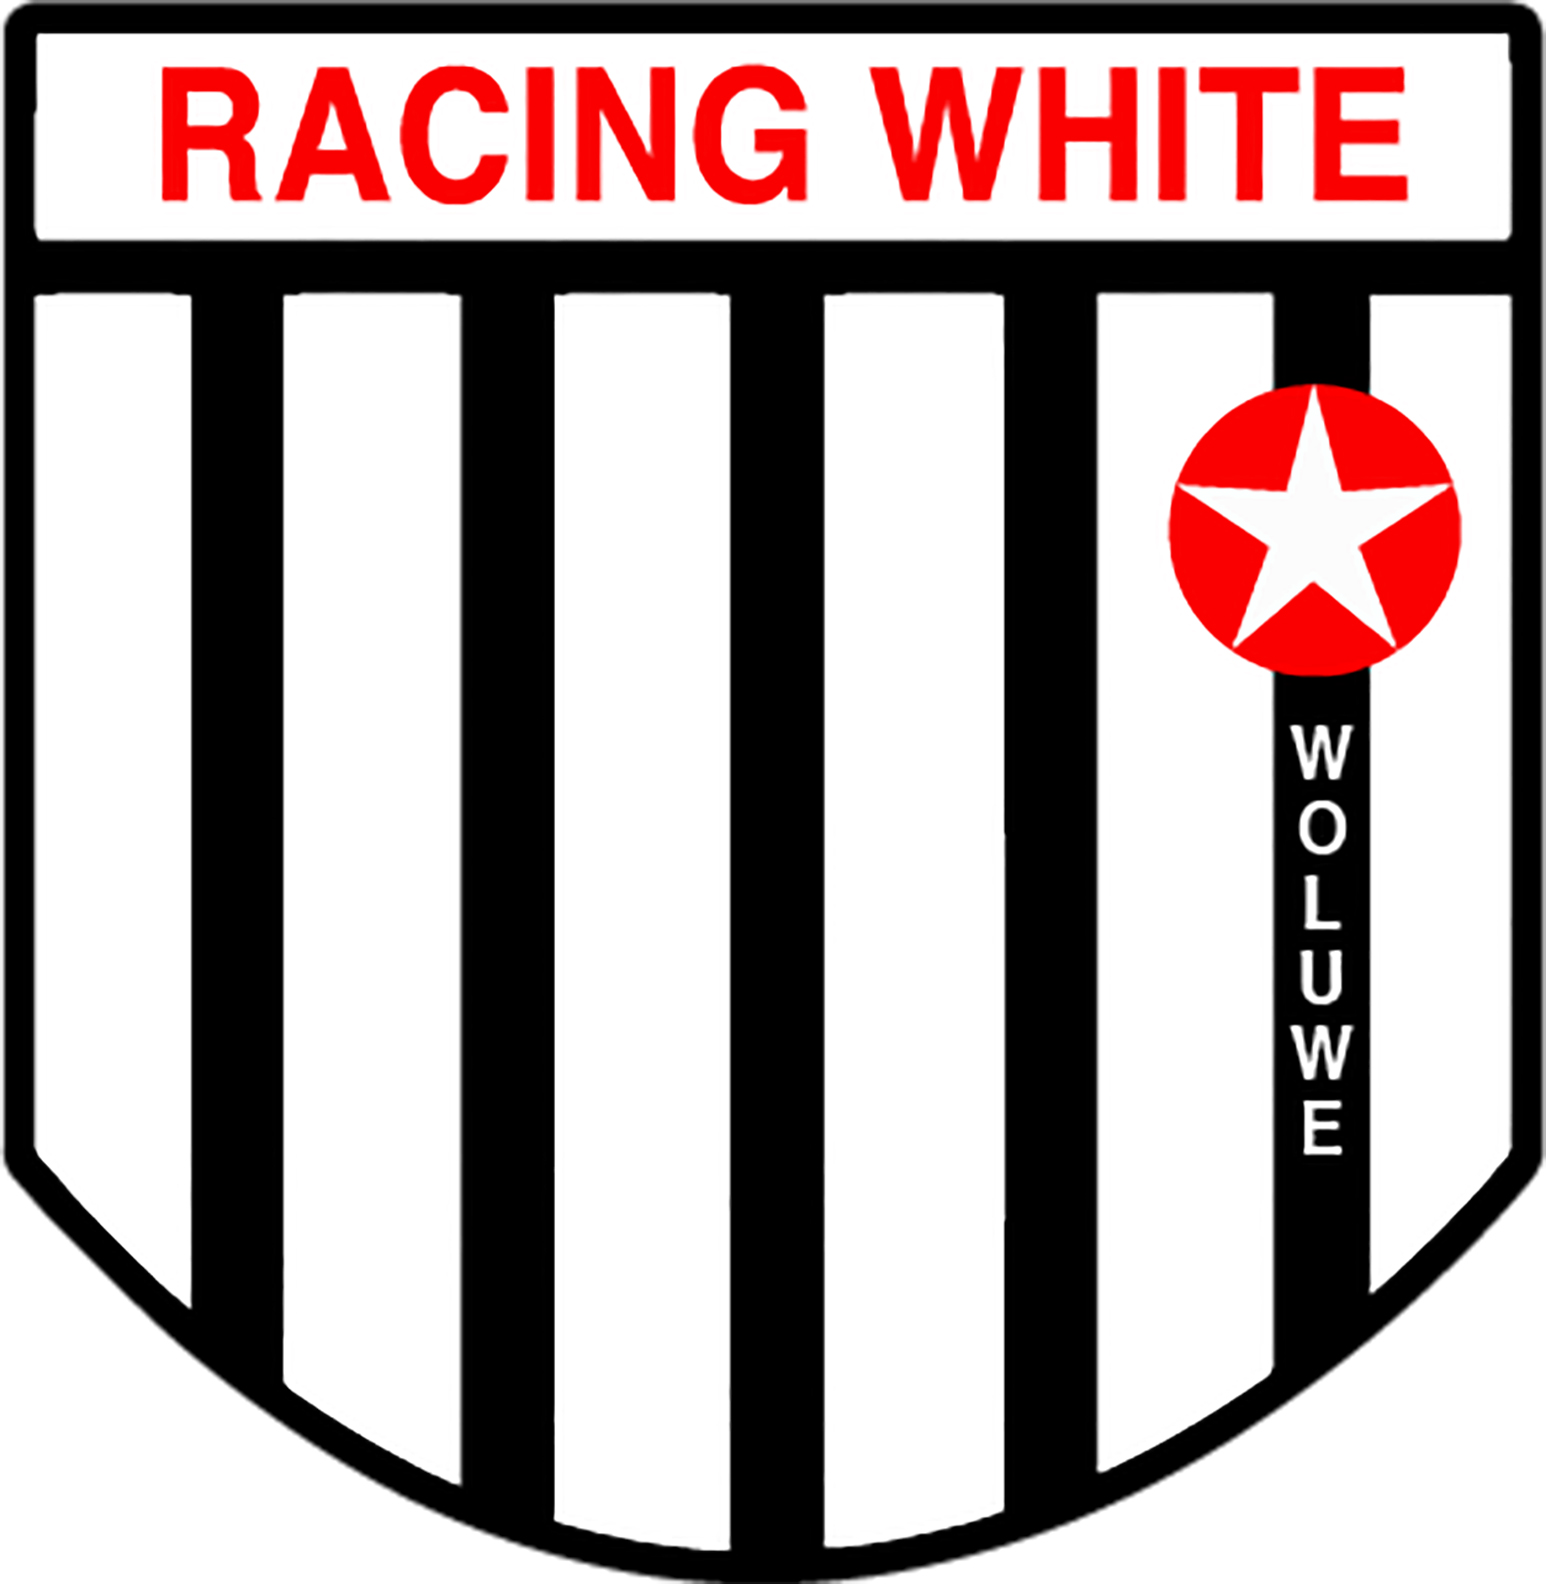 4 - Racing White Woluwe A